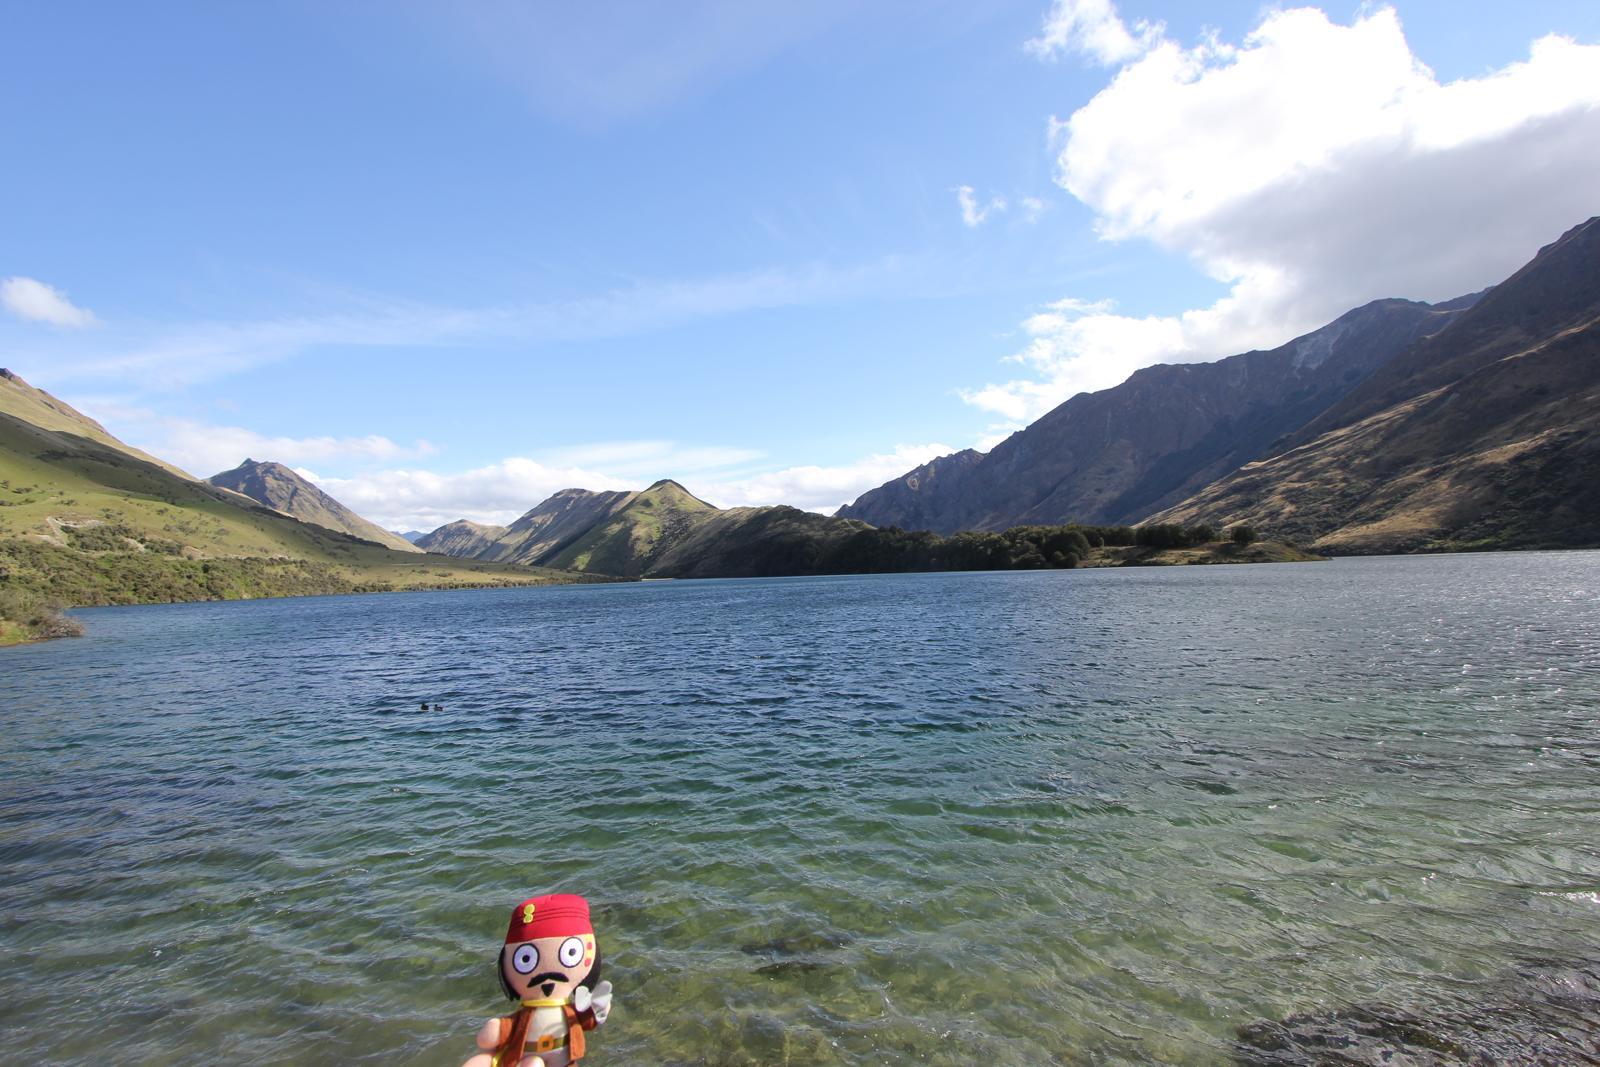 @travellingjack, checking out a pretty lake